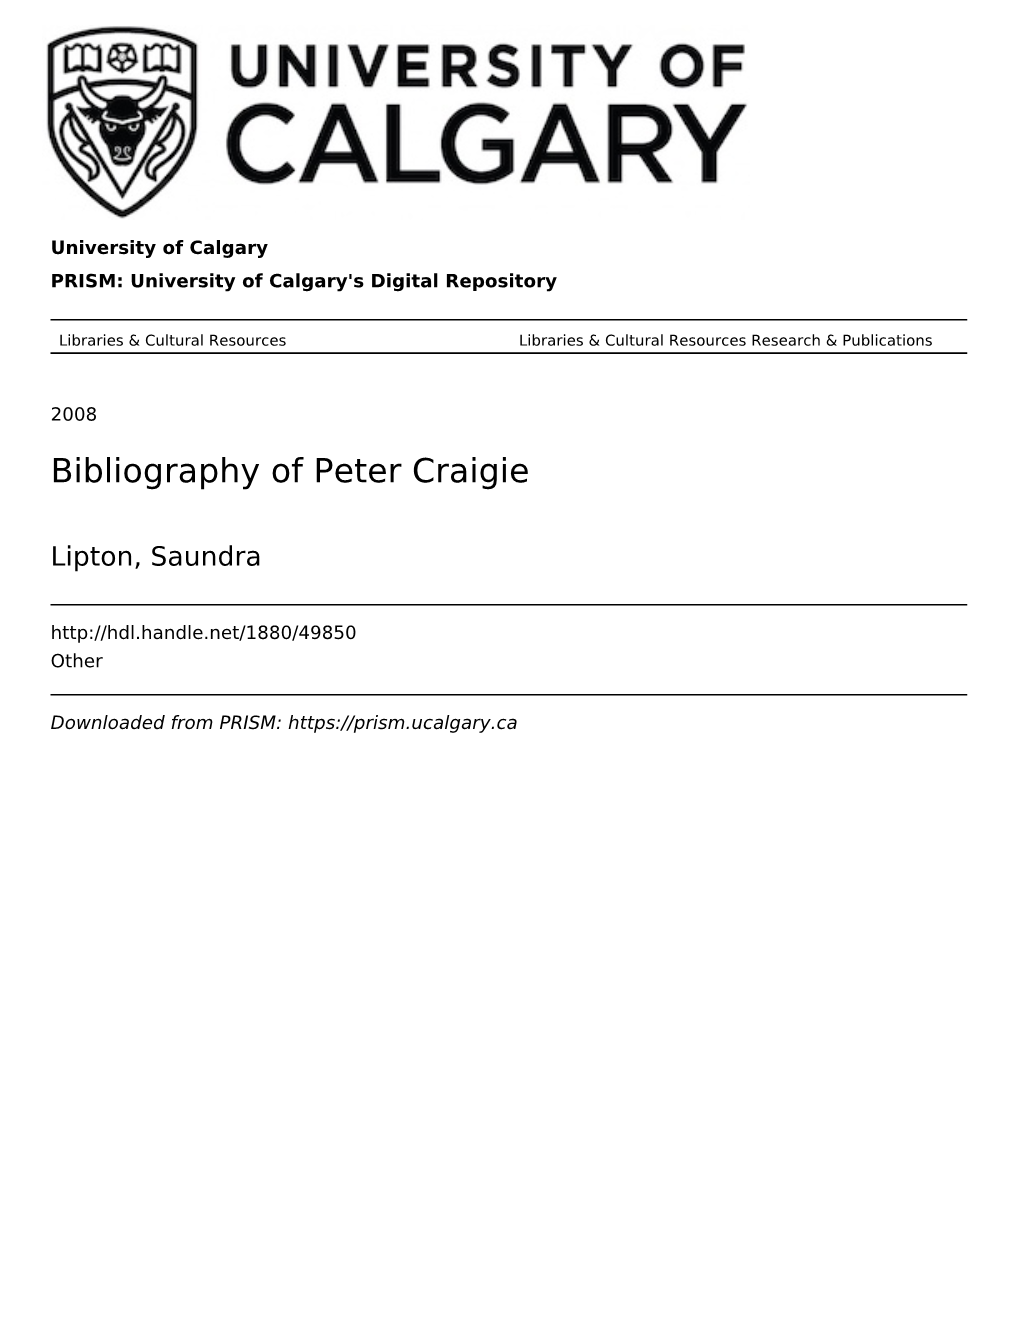 Bibliography of Peter Craigie